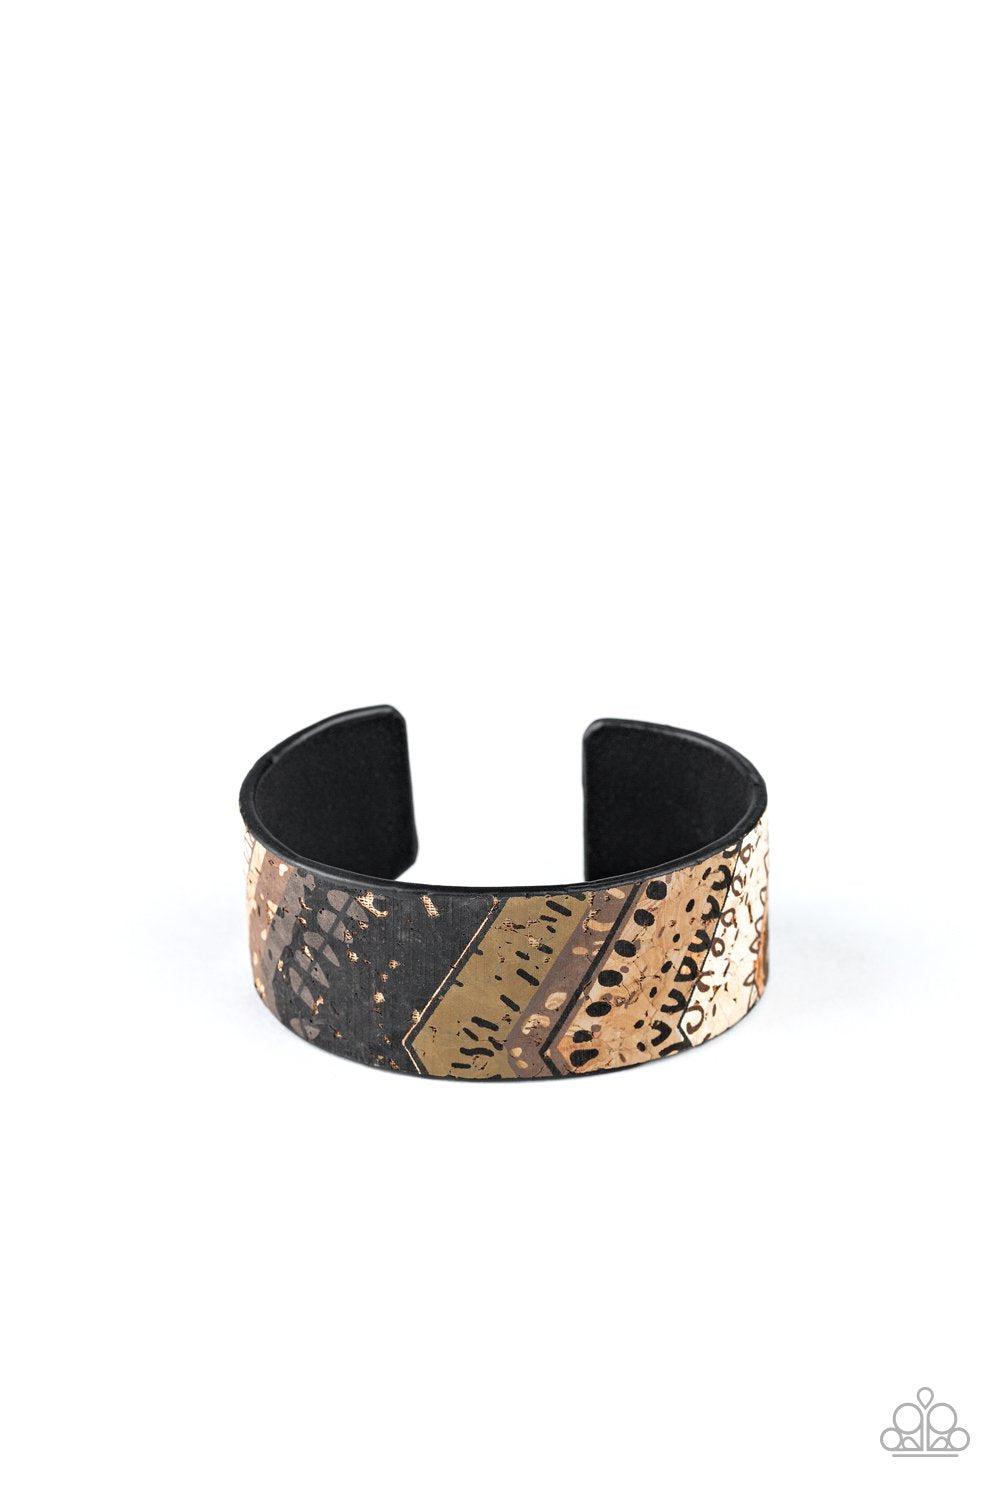 Come Uncorked White Cork Cuff Bracelet - Paparazzi Accessories-CarasShop.com - $5 Jewelry by Cara Jewels